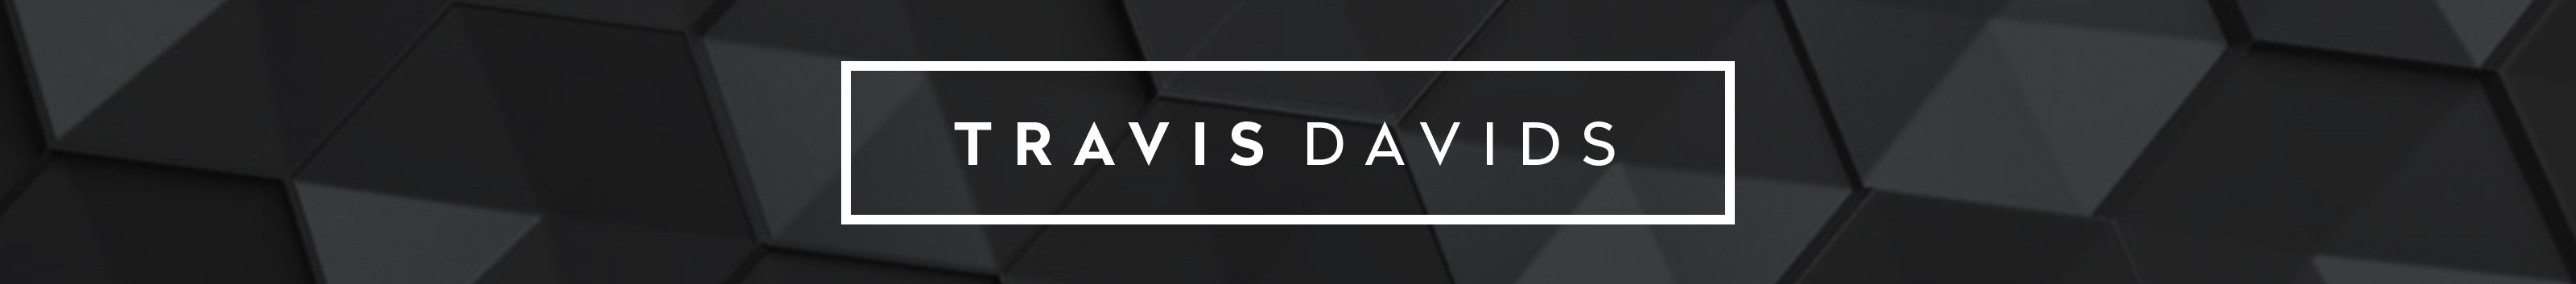 Travis Davids's profile banner